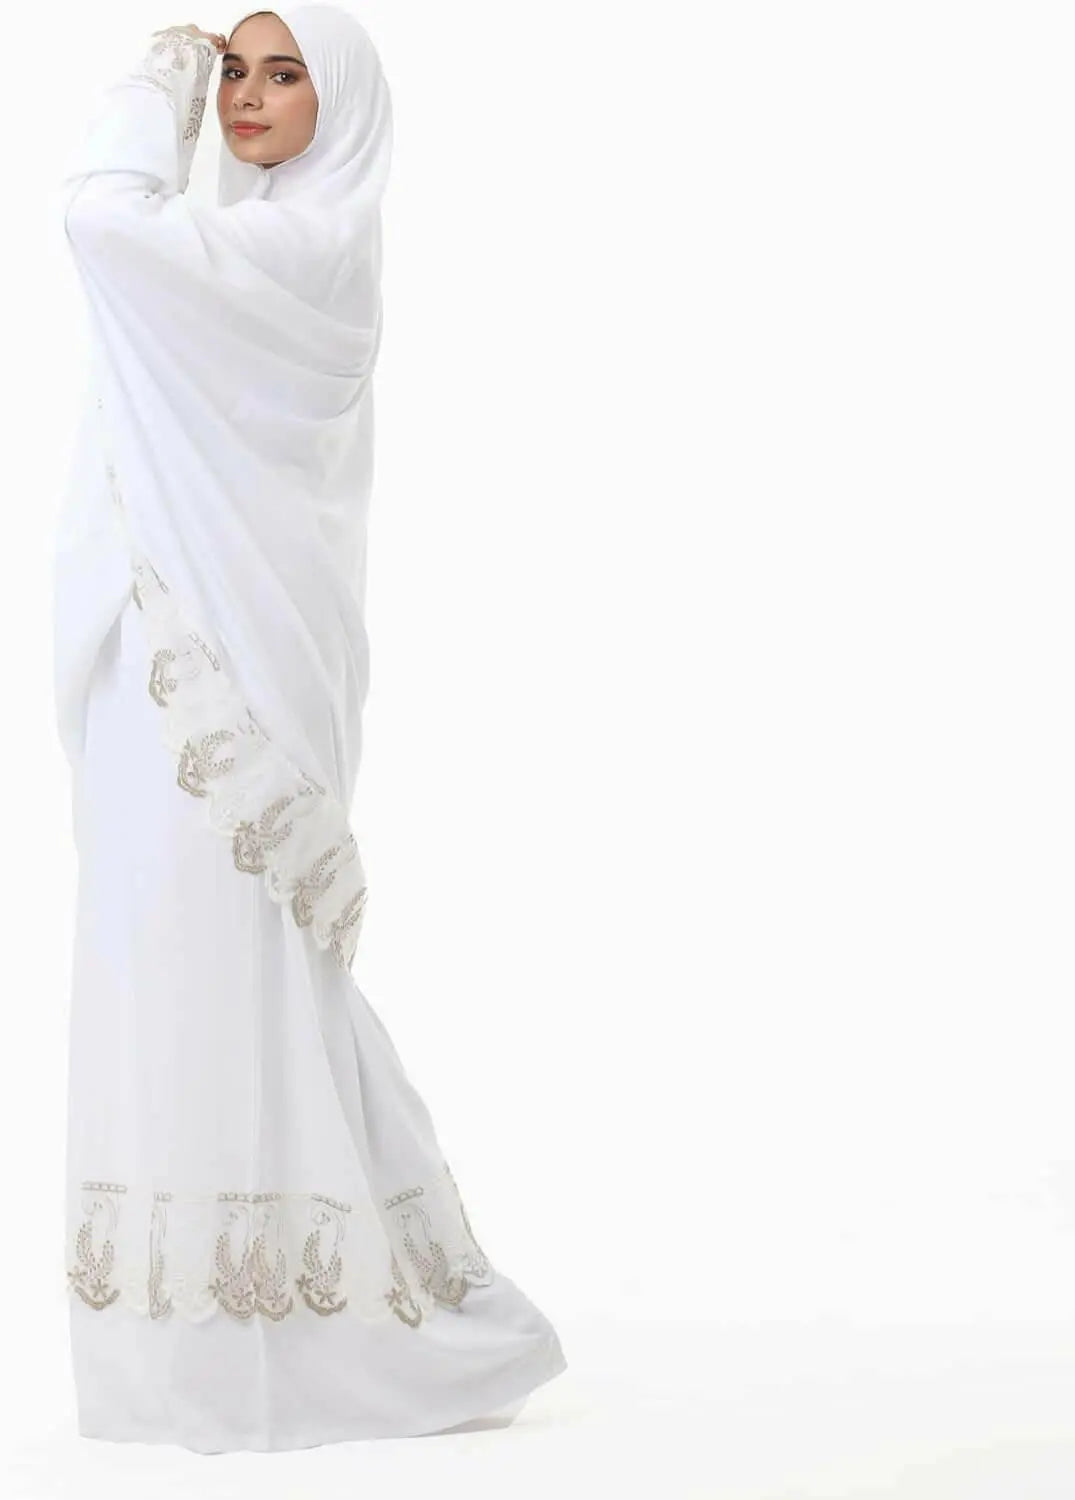 Abaya Two-Piece Muslim Dress for Islamic Prayer- Comfortable and Elegant Hijab Prayer Dress Set